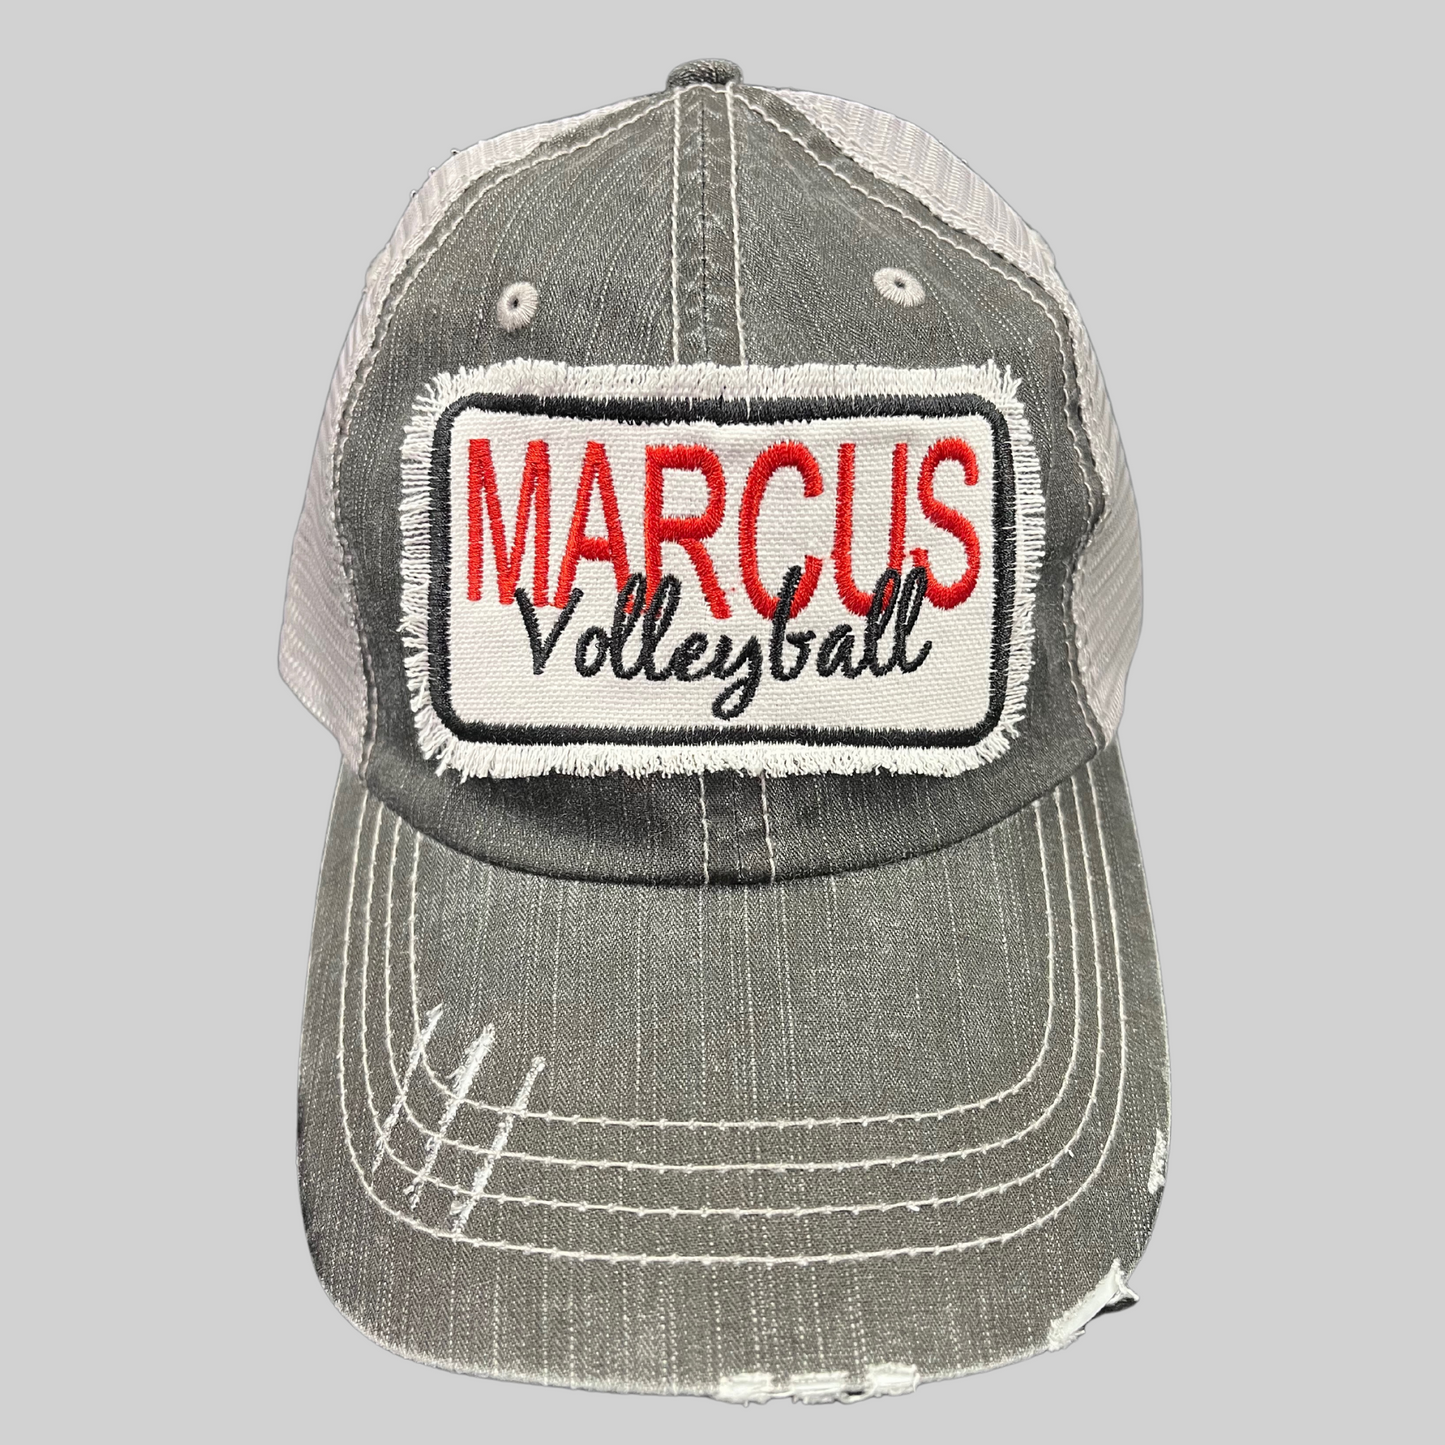 Marcus High School Volleyball Hat 2